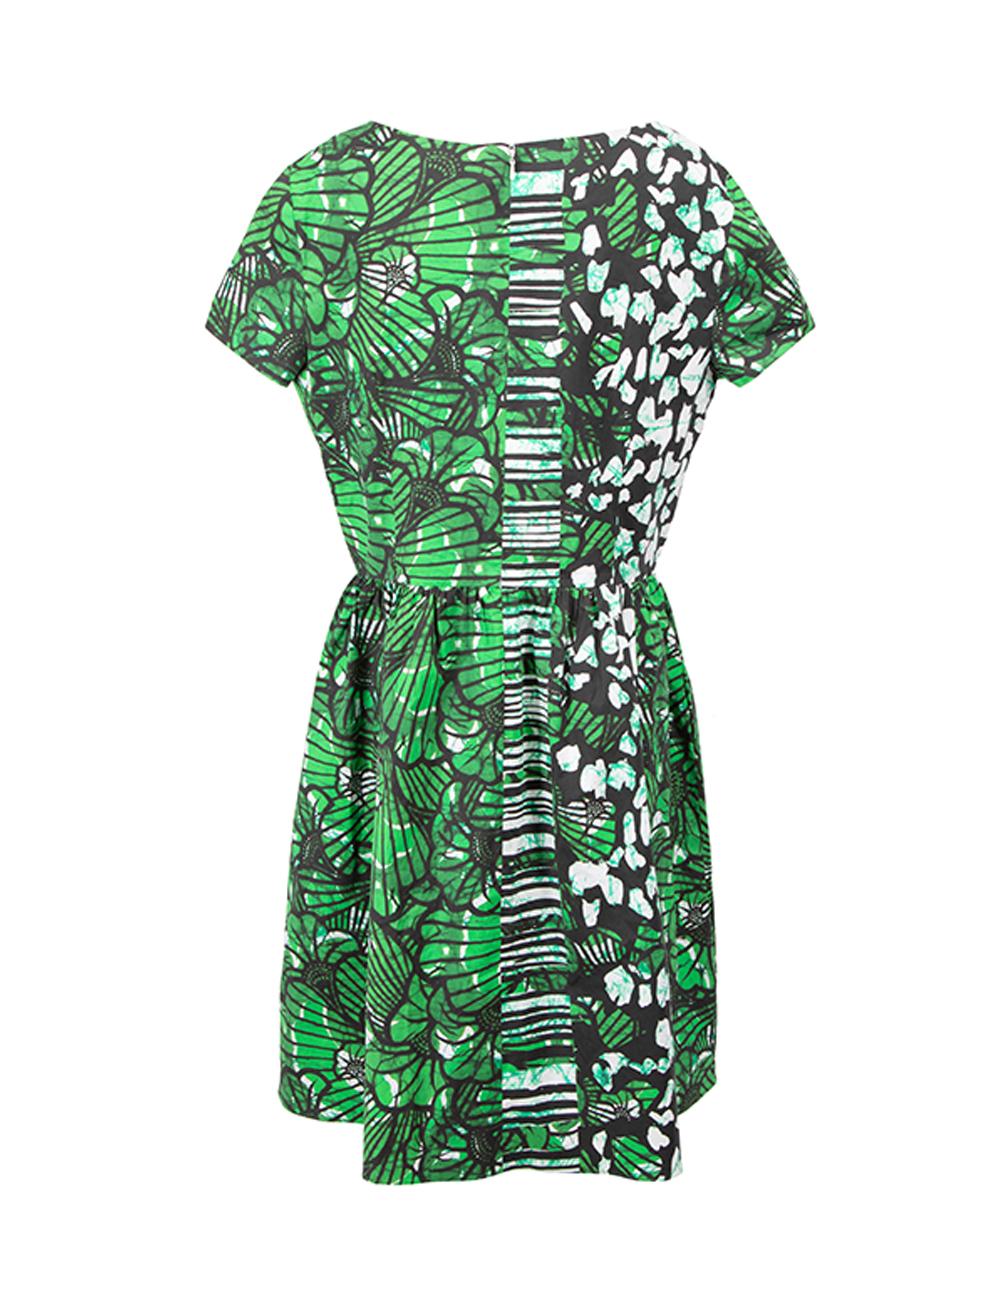 Oscar de la Renta Women's Green Abstract Printed Short Sleeve Mini Dress In Good Condition For Sale In London, GB